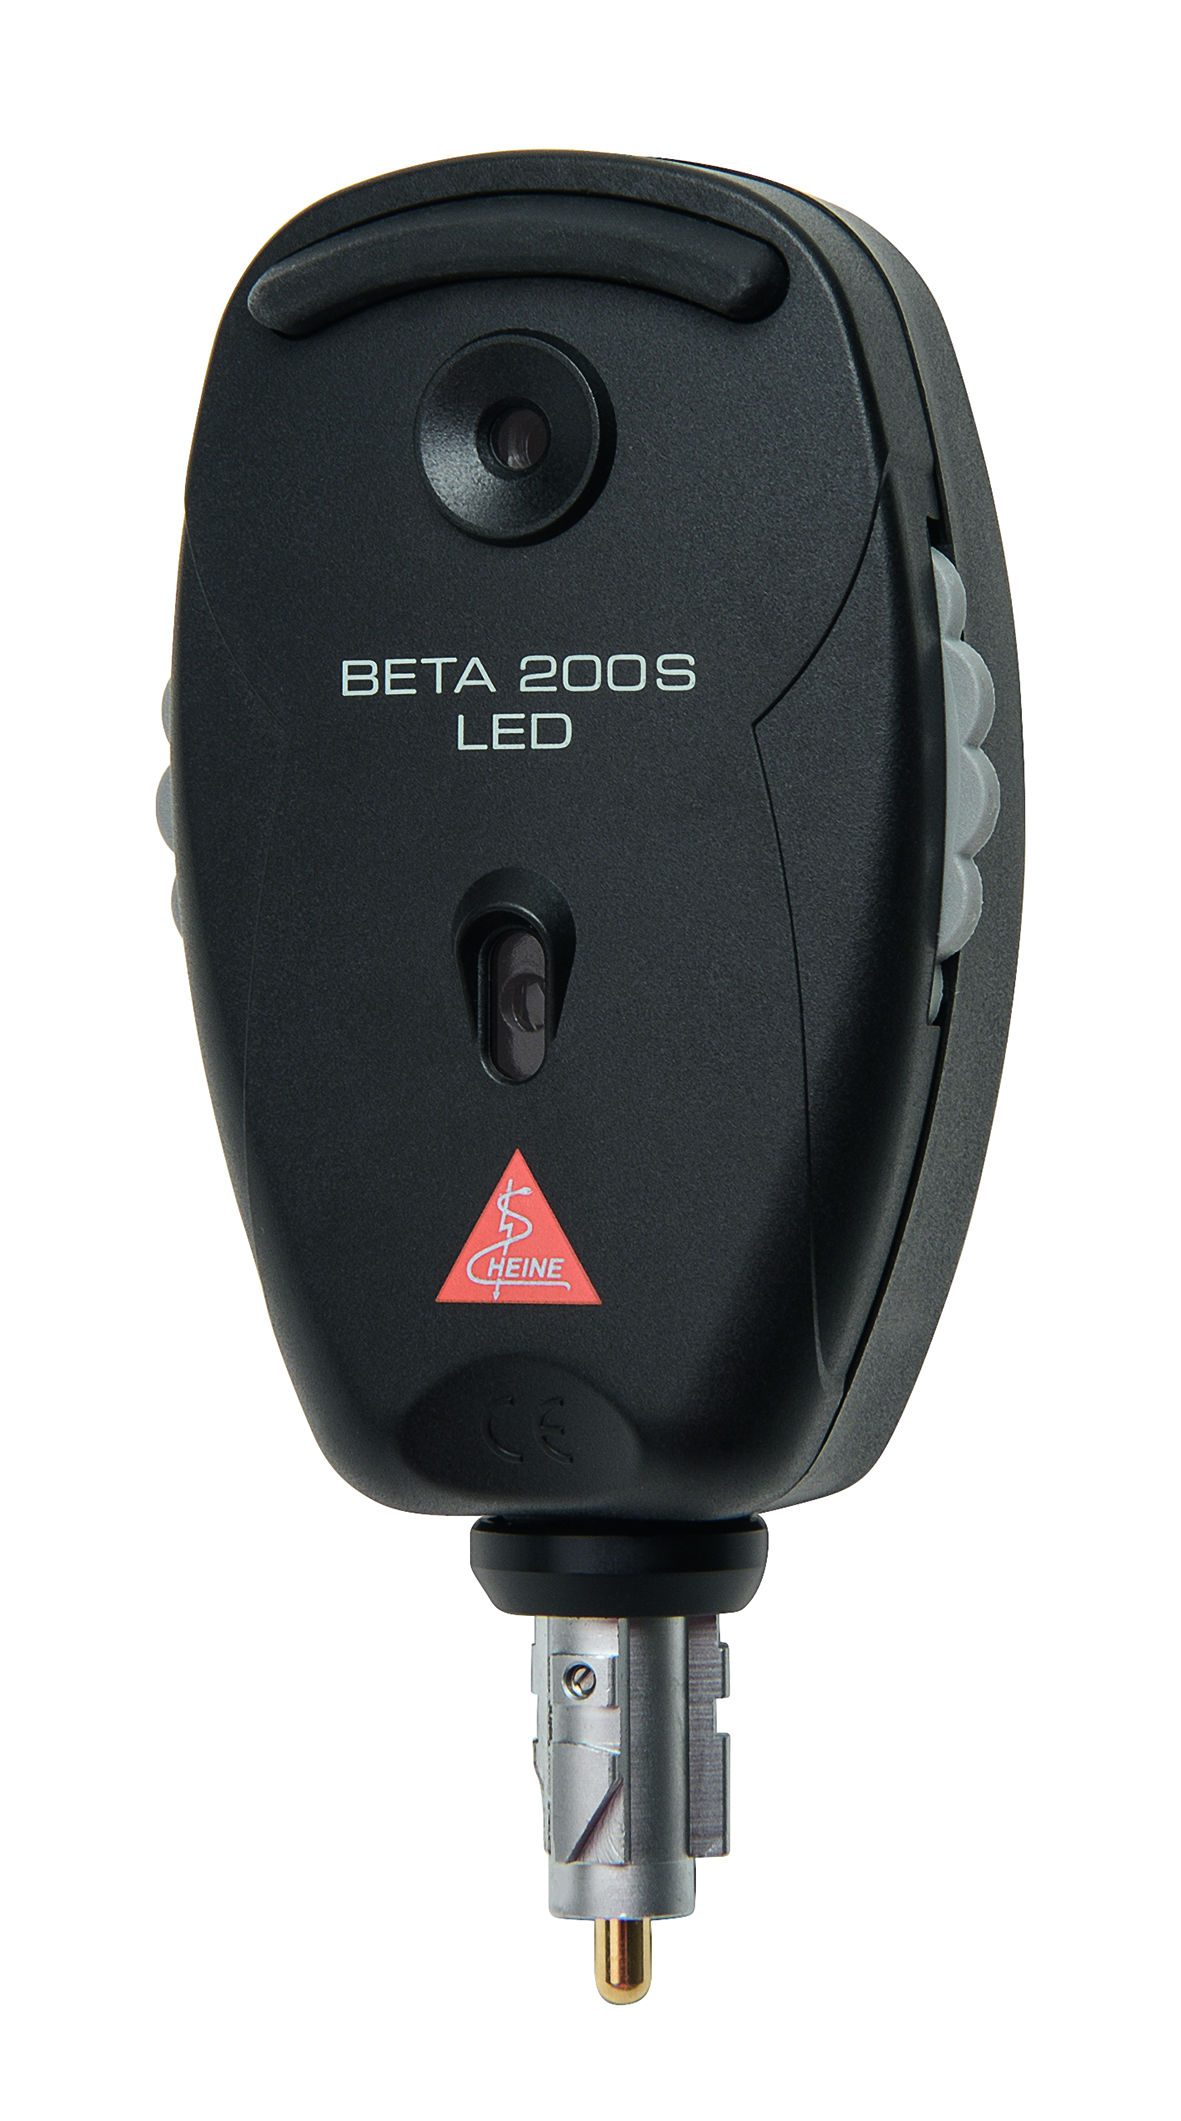 HEINE BETA 200S LED Ophthalmoscope head [C-008.30.120]
